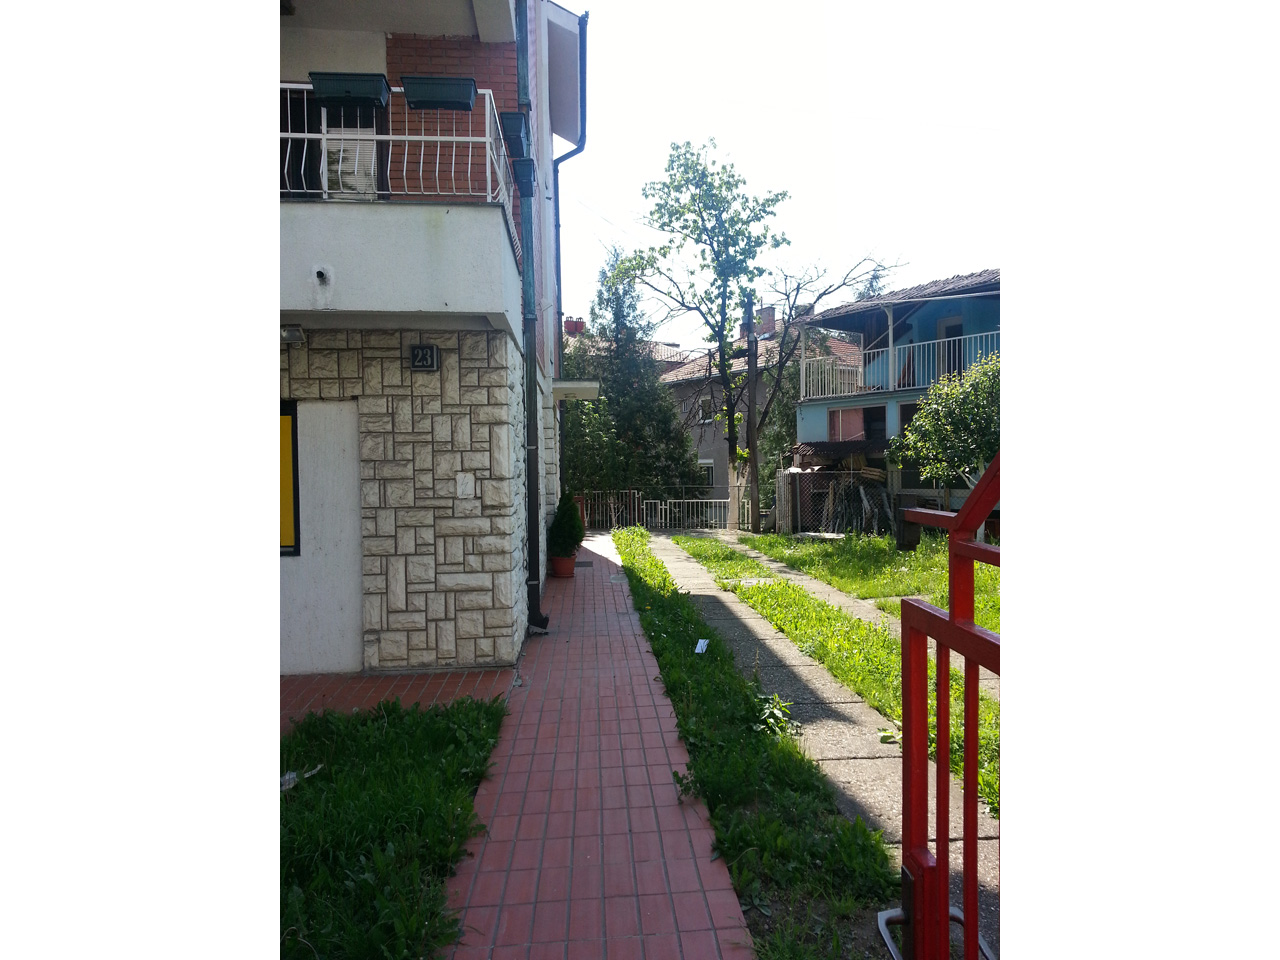 HOME FOR OLD - ZARKOVACKI VRT Homes and care for the elderly Beograd